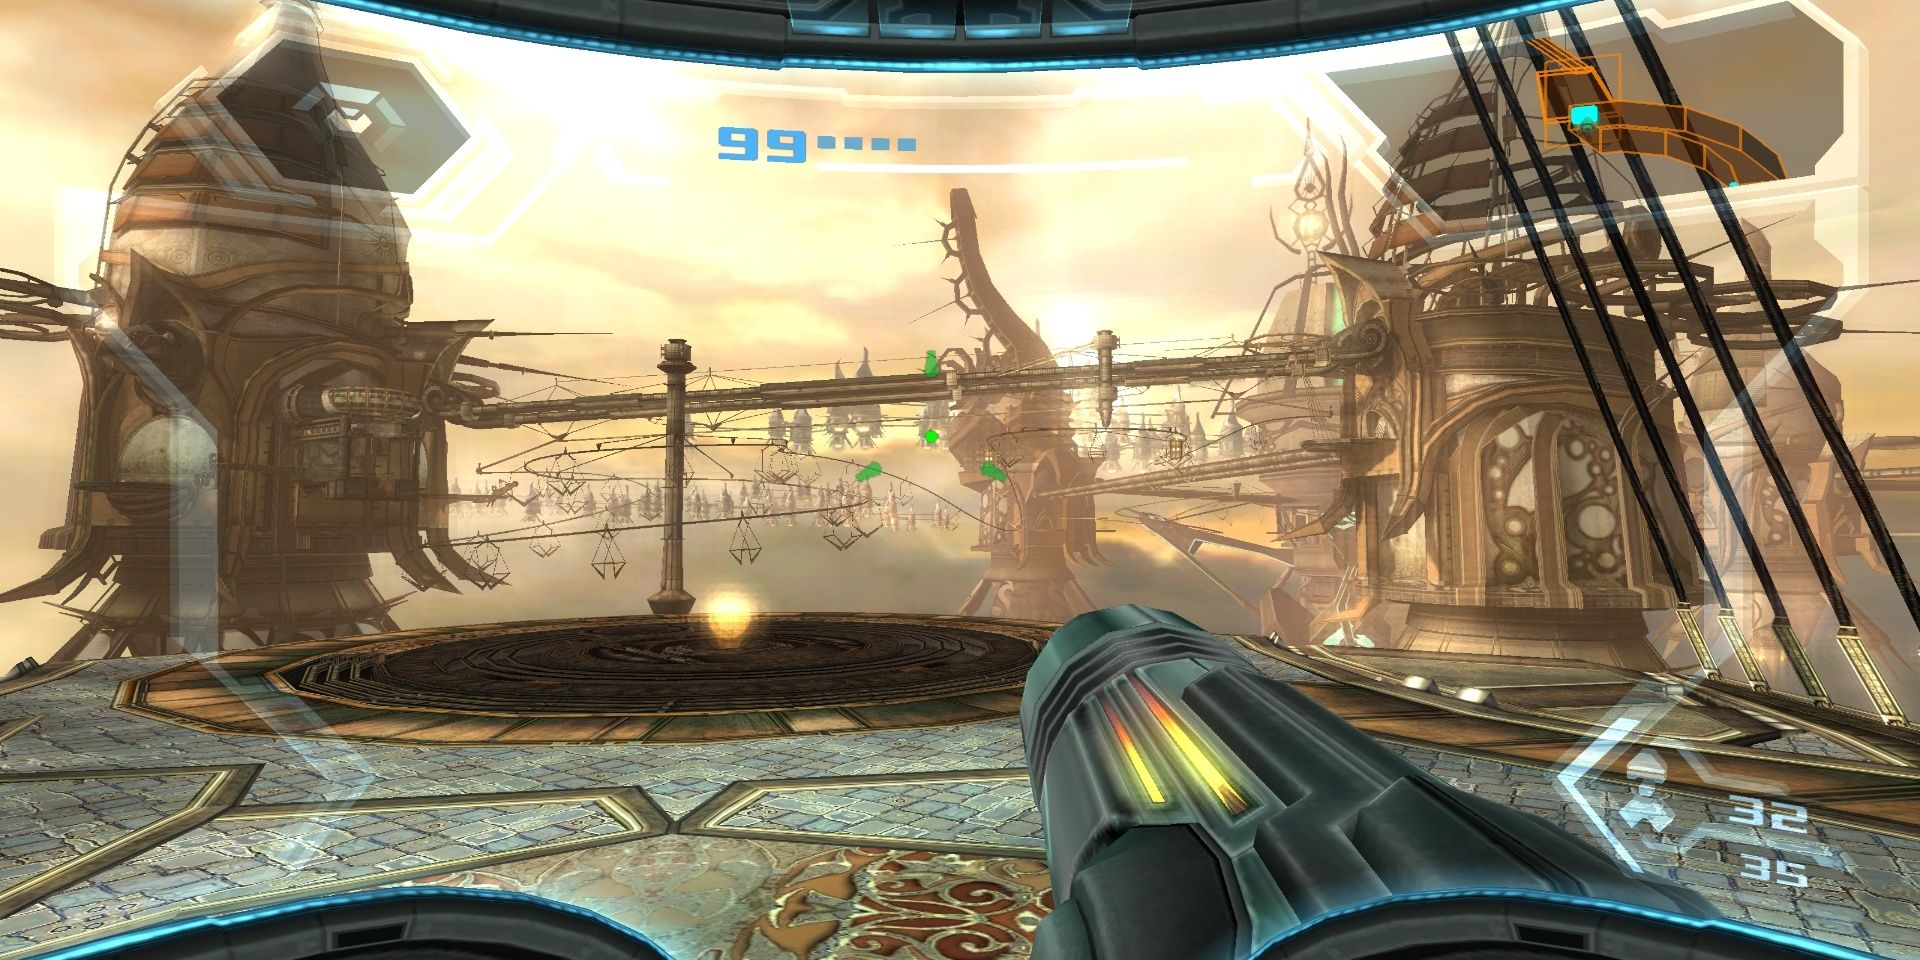 A screenshot showing gameplay in Metroid Prime Trilogy